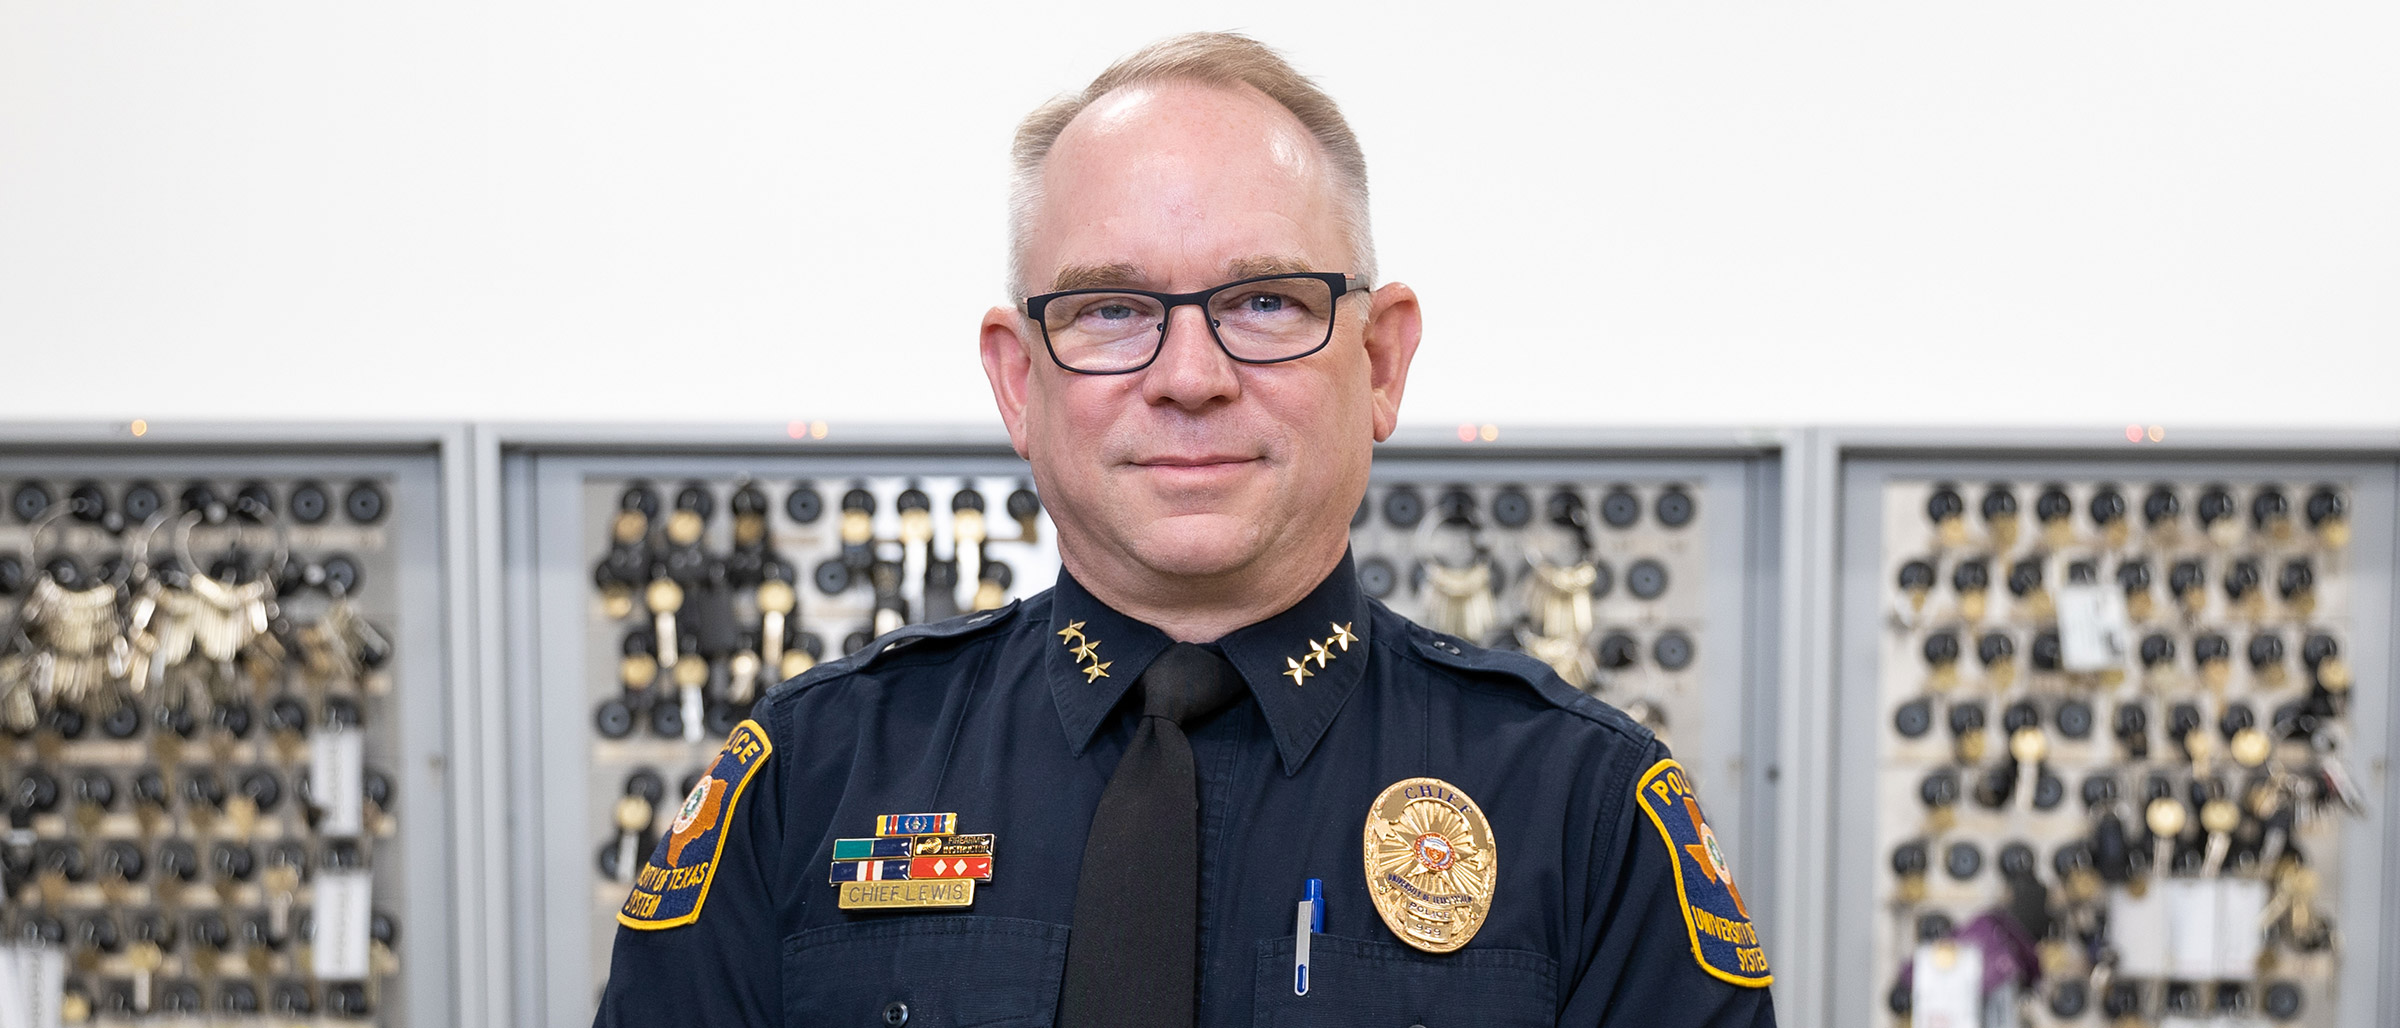 man in police uniform background of keys